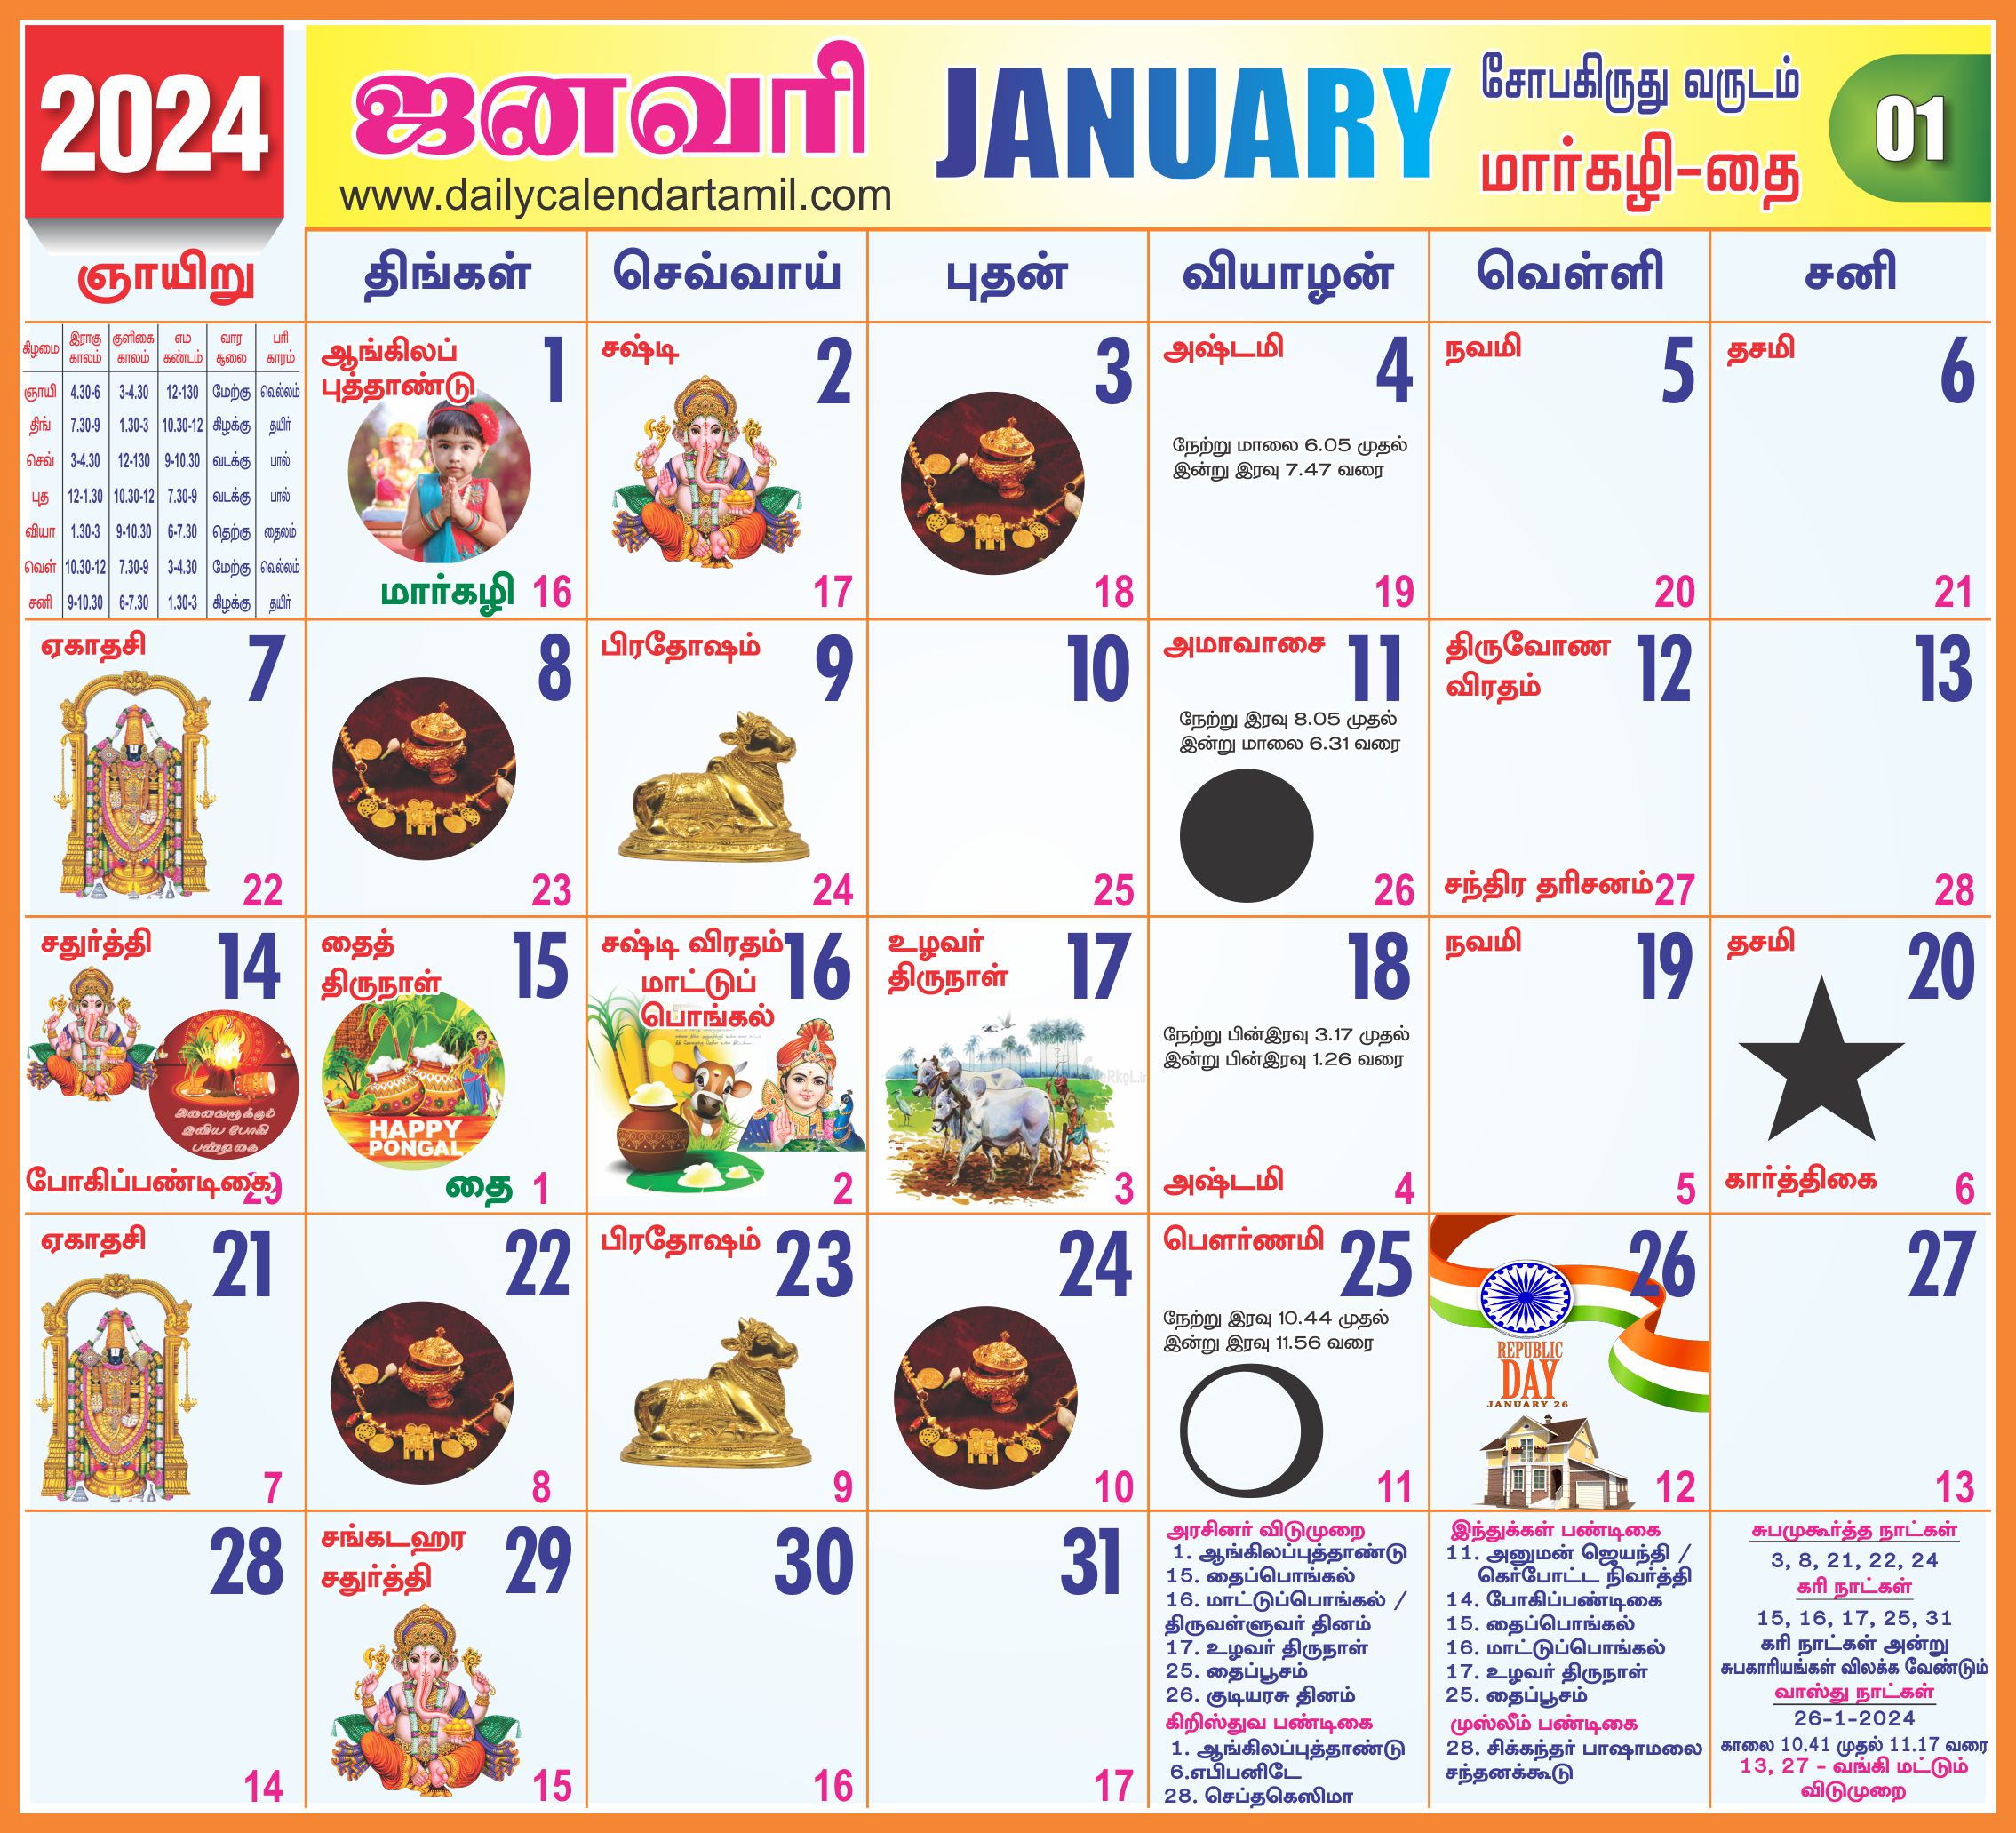 Tamil Calendar 2022 Tamil Calendar January 2022 | தமிழ் காலண்டர் 2022